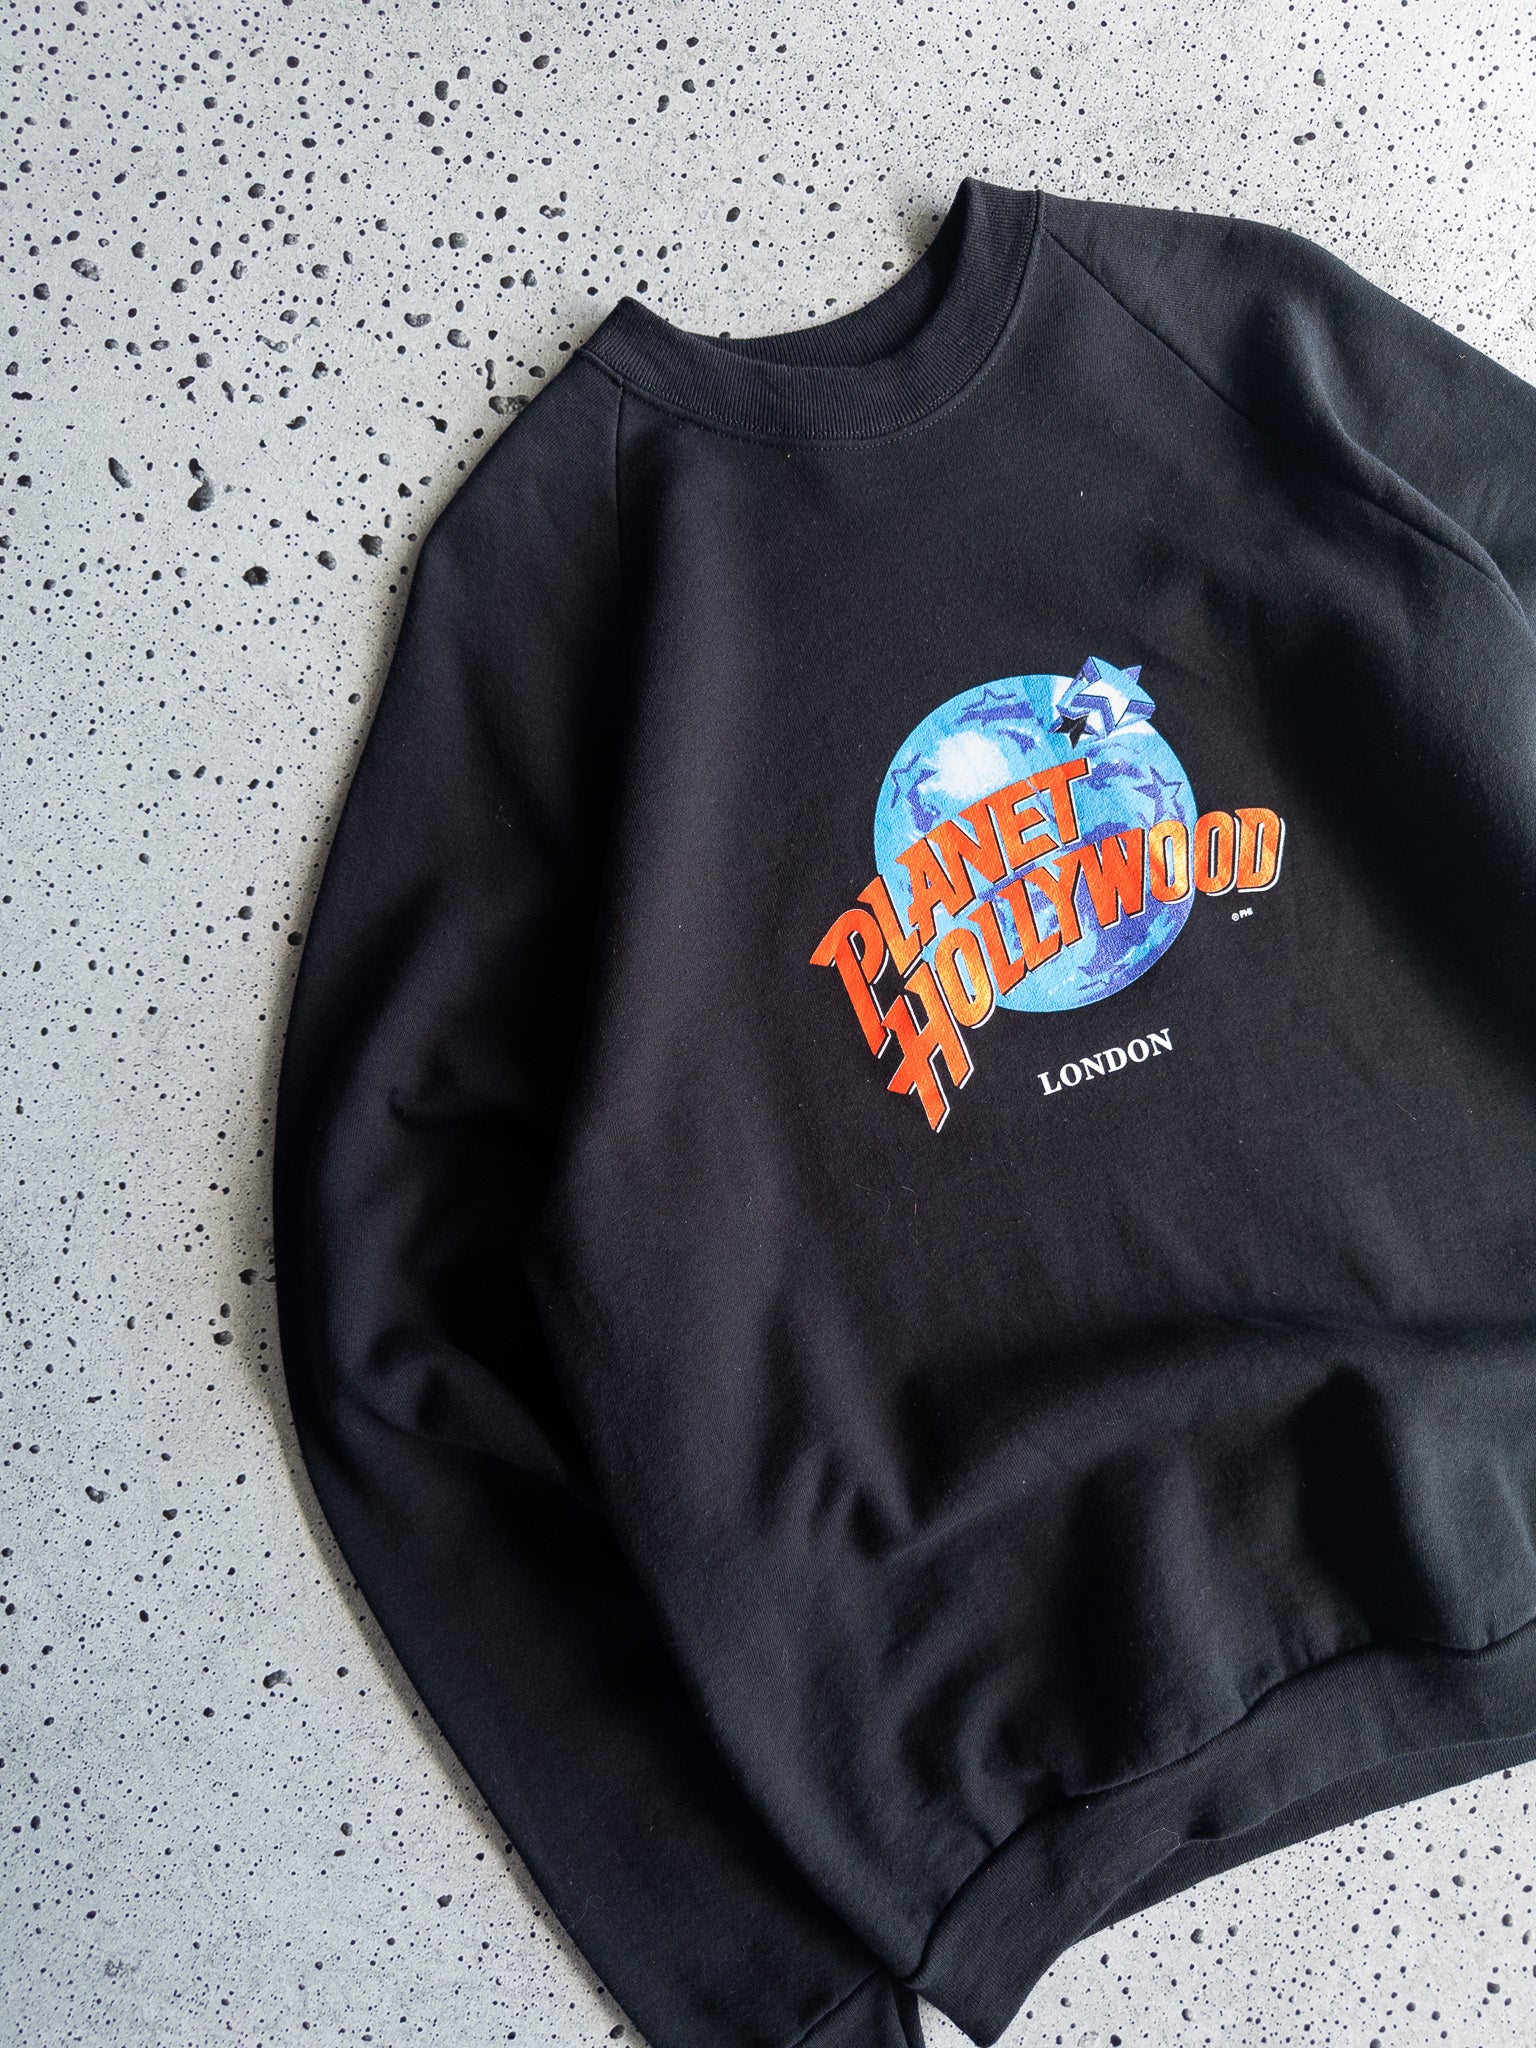 Vintage Planet Hollywood London Sweatshirt (XL)